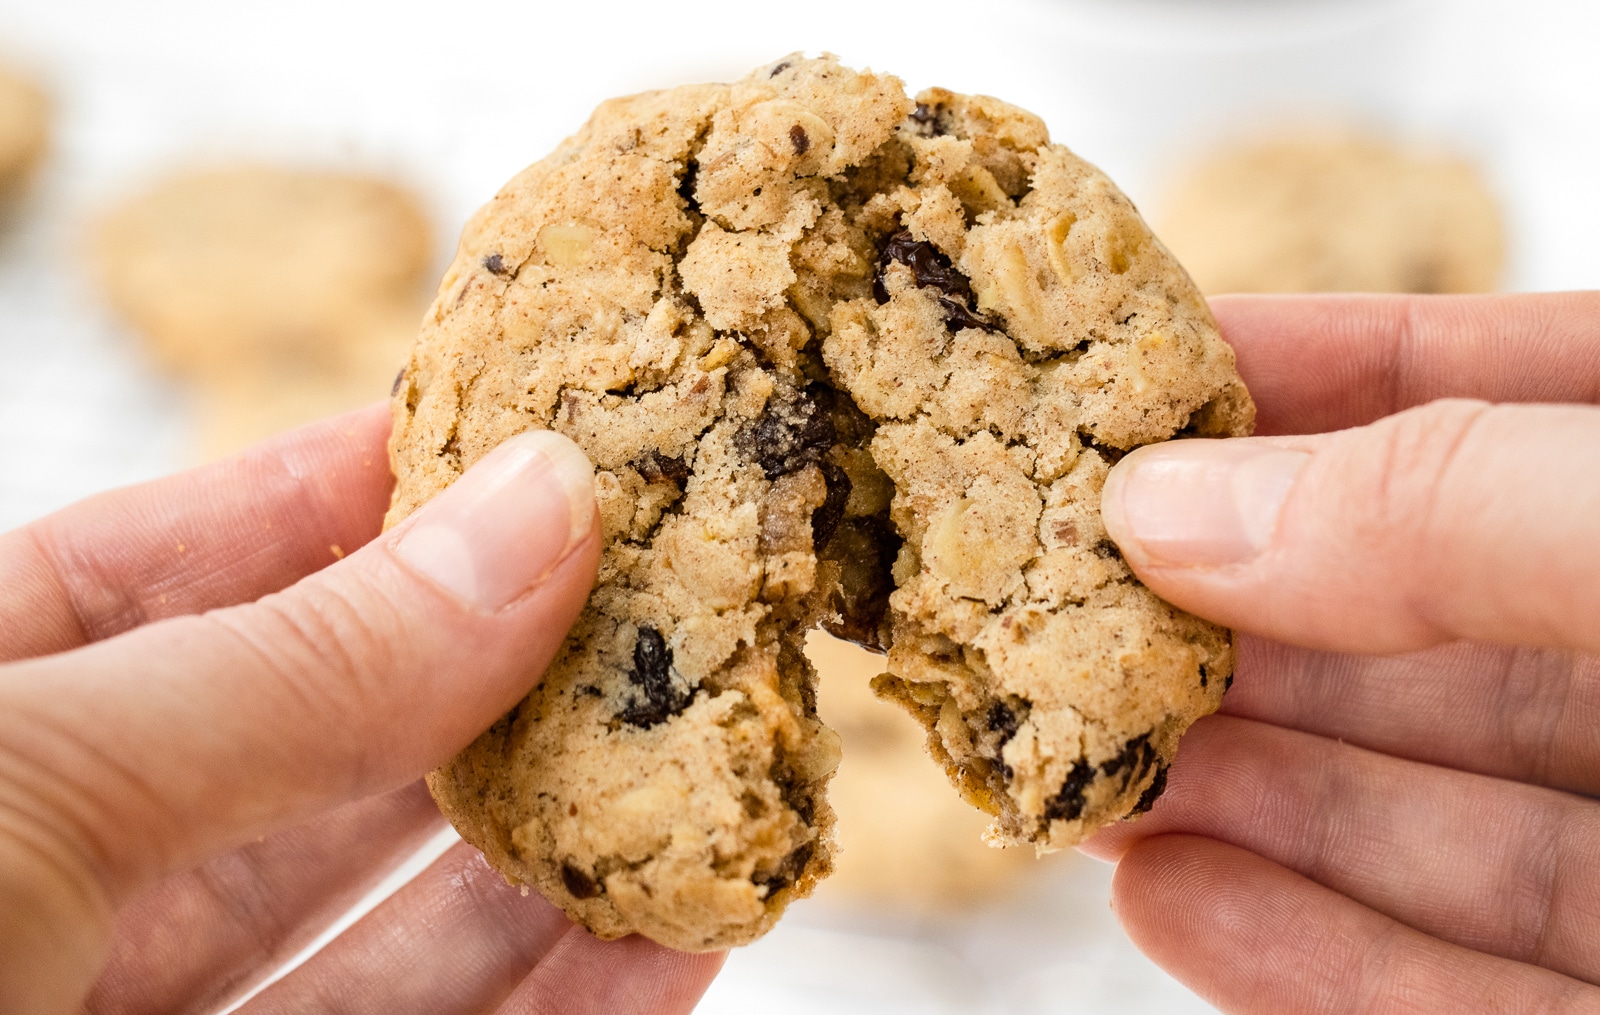 hand pulling apart one vegan oatmeal raisin cookies - brown fluffy cookies with dark brown raisins